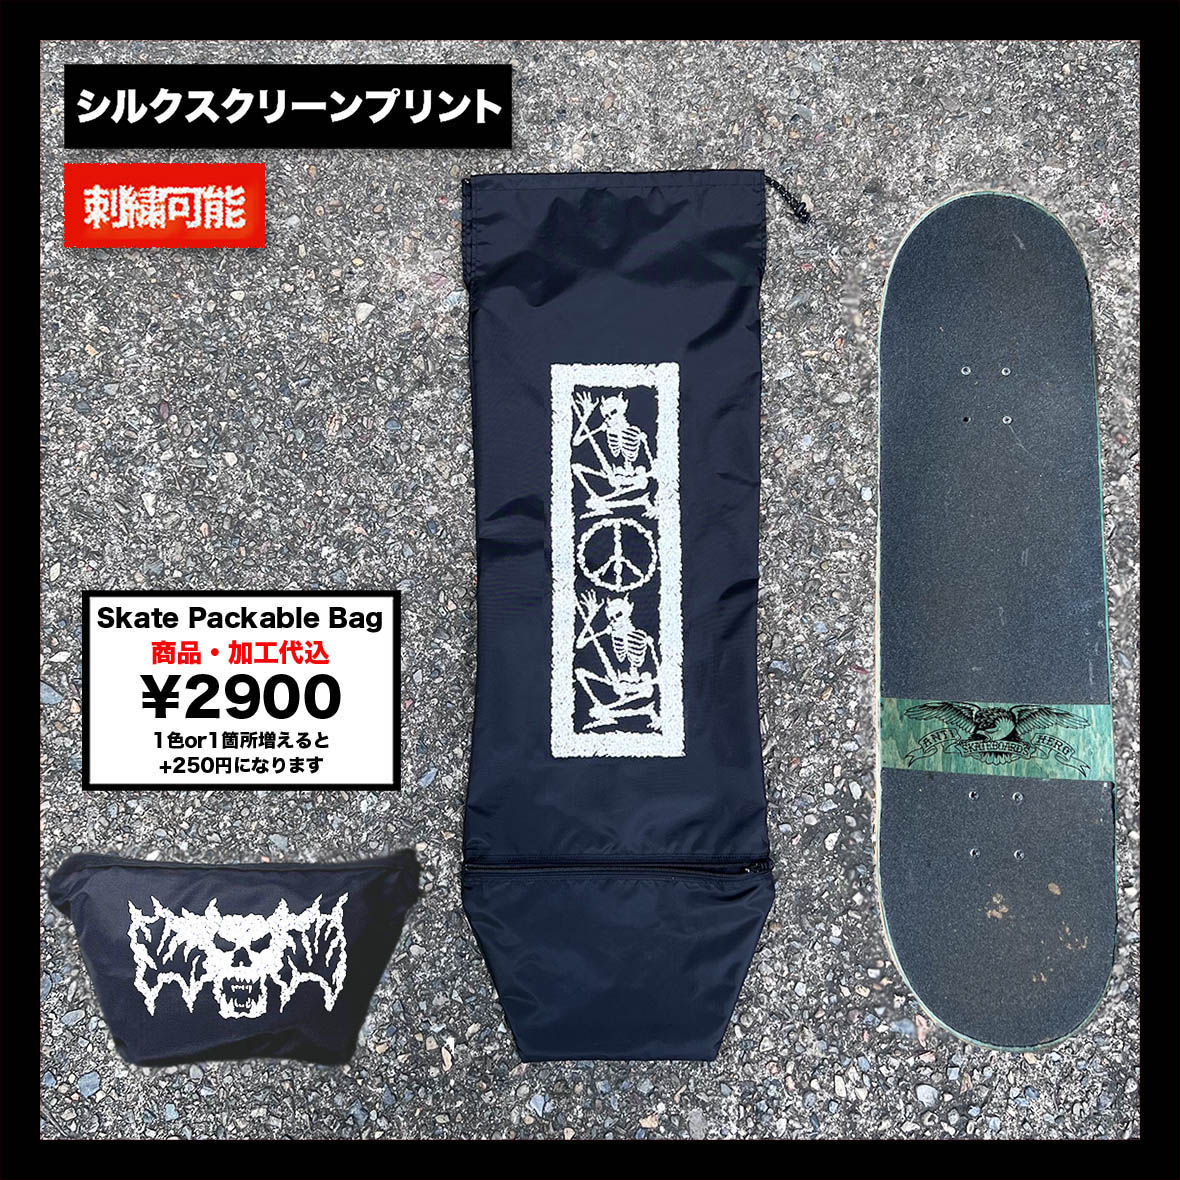 Skate Packable Bag (品番CPSEW013)